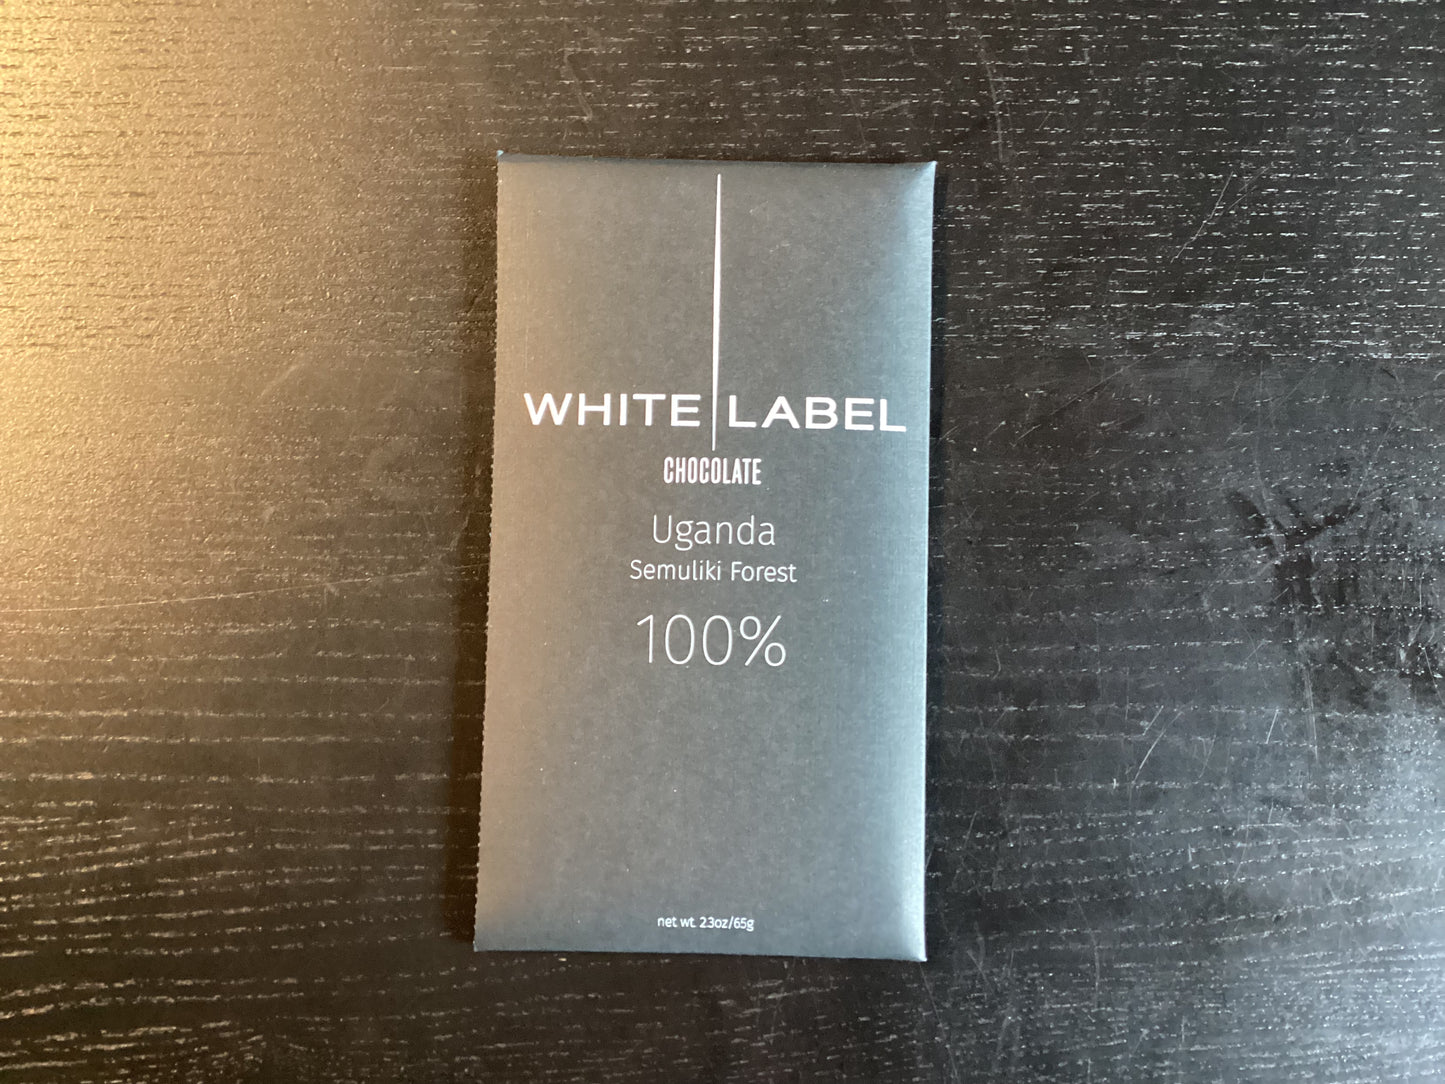 White Label Semuliki Forest Uganda 100%